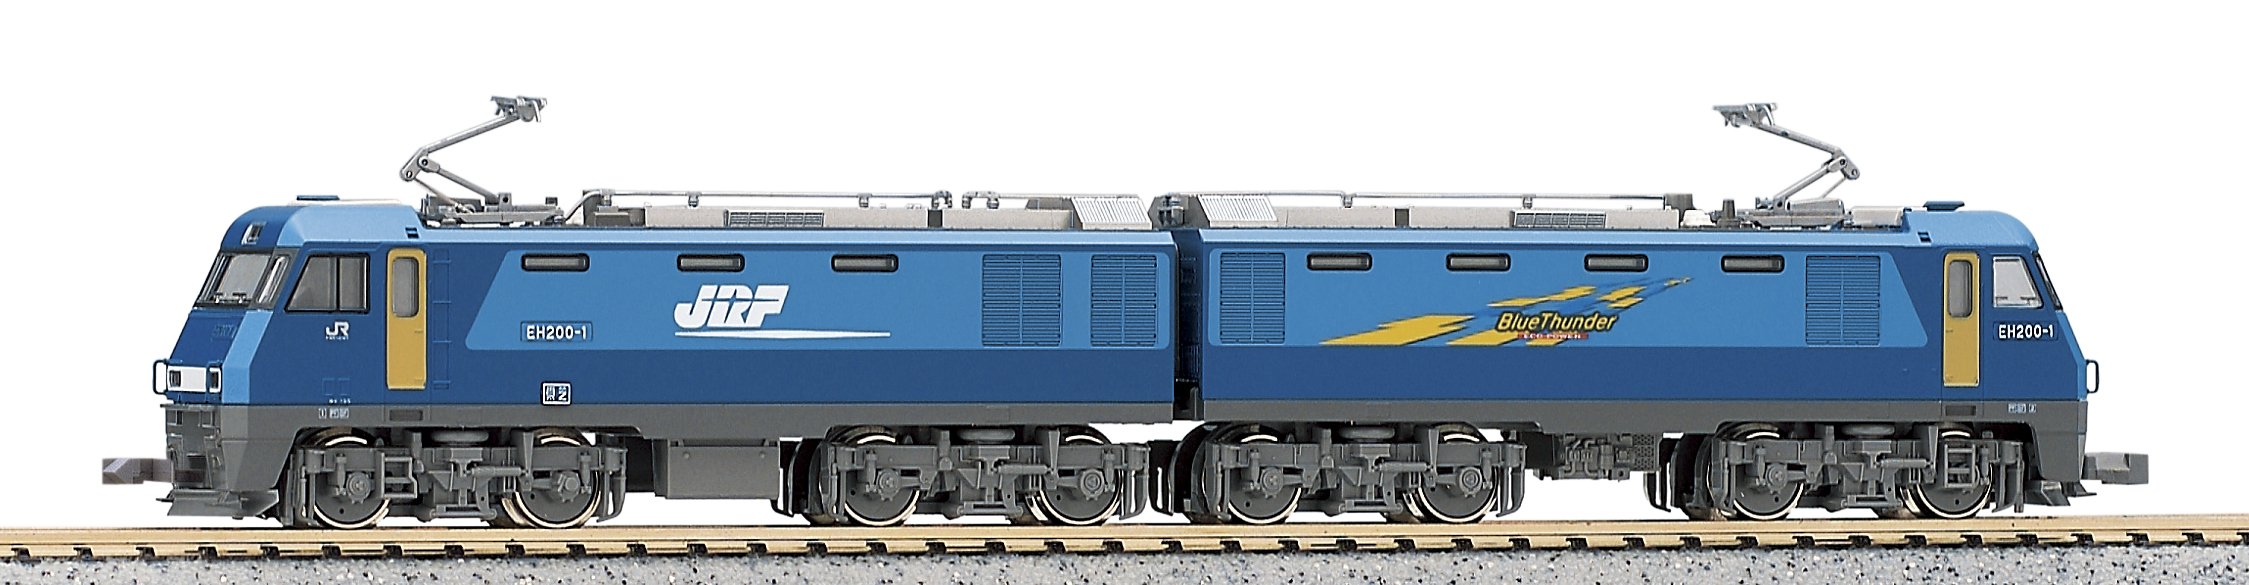 Kato N Gauge 3045 Electric Locomotive - Railway Model Eh200